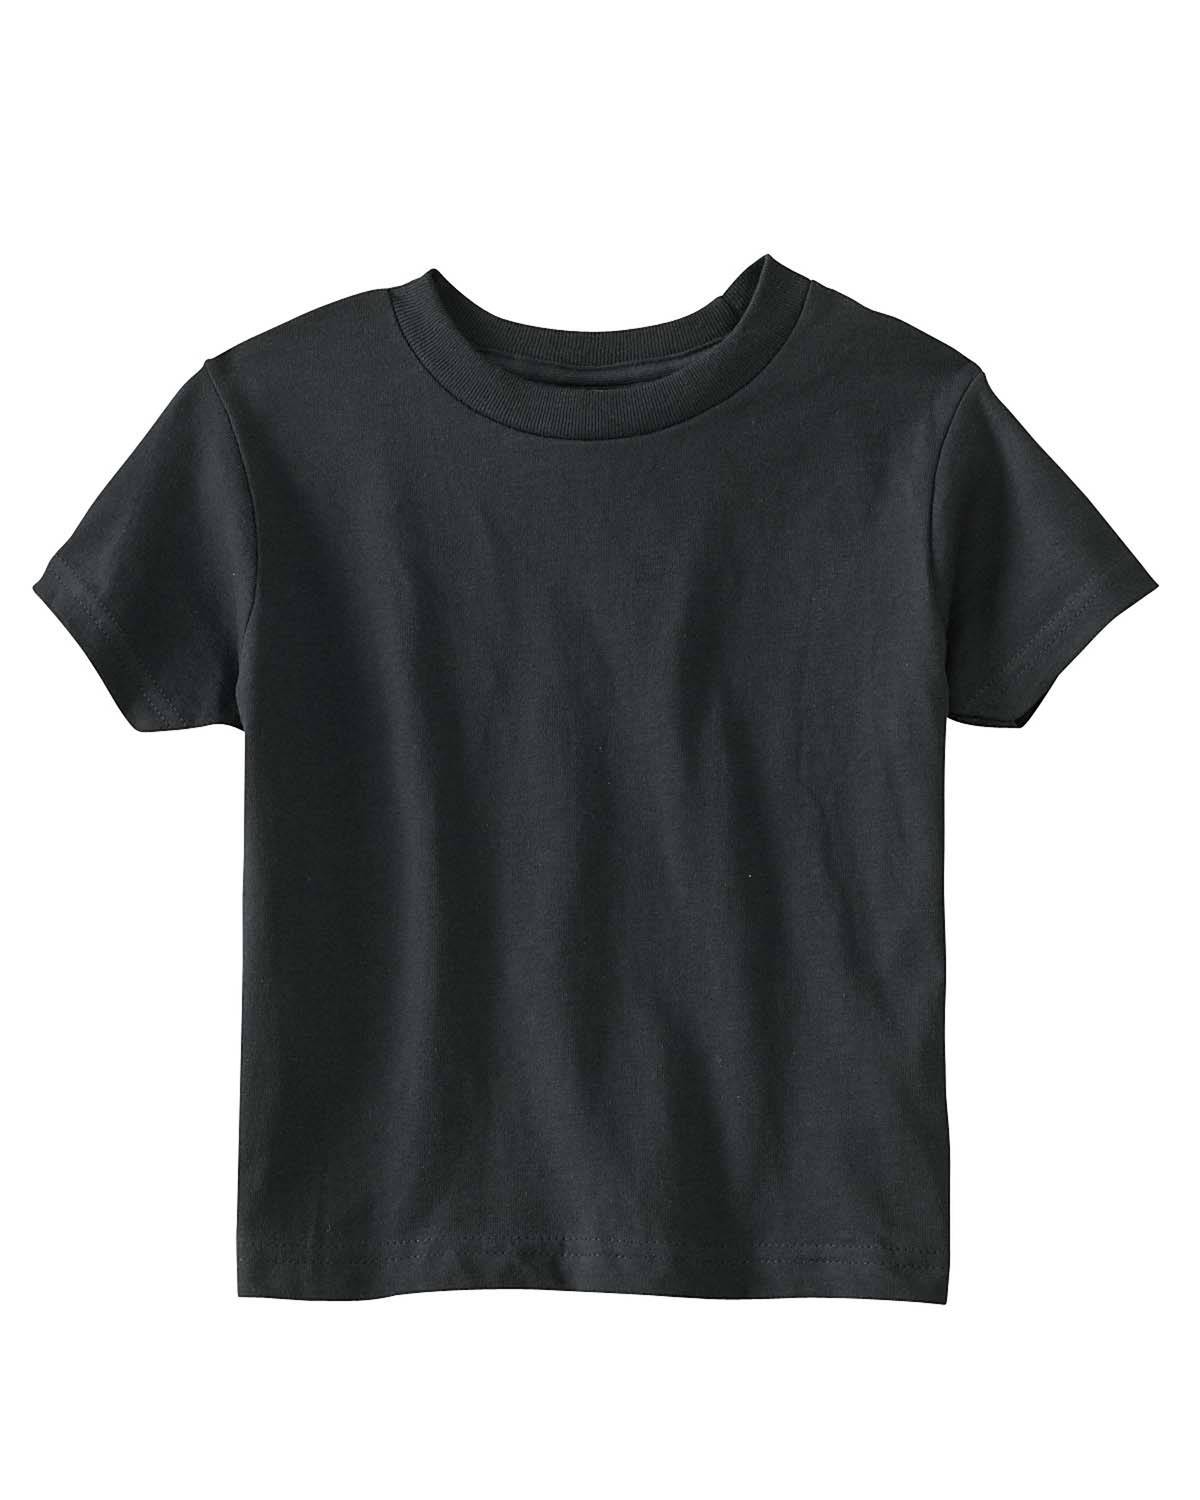 Buy Rabbit Skins RS3301 5.5 oz Toddler Jersey Short Sleeve T Shirt